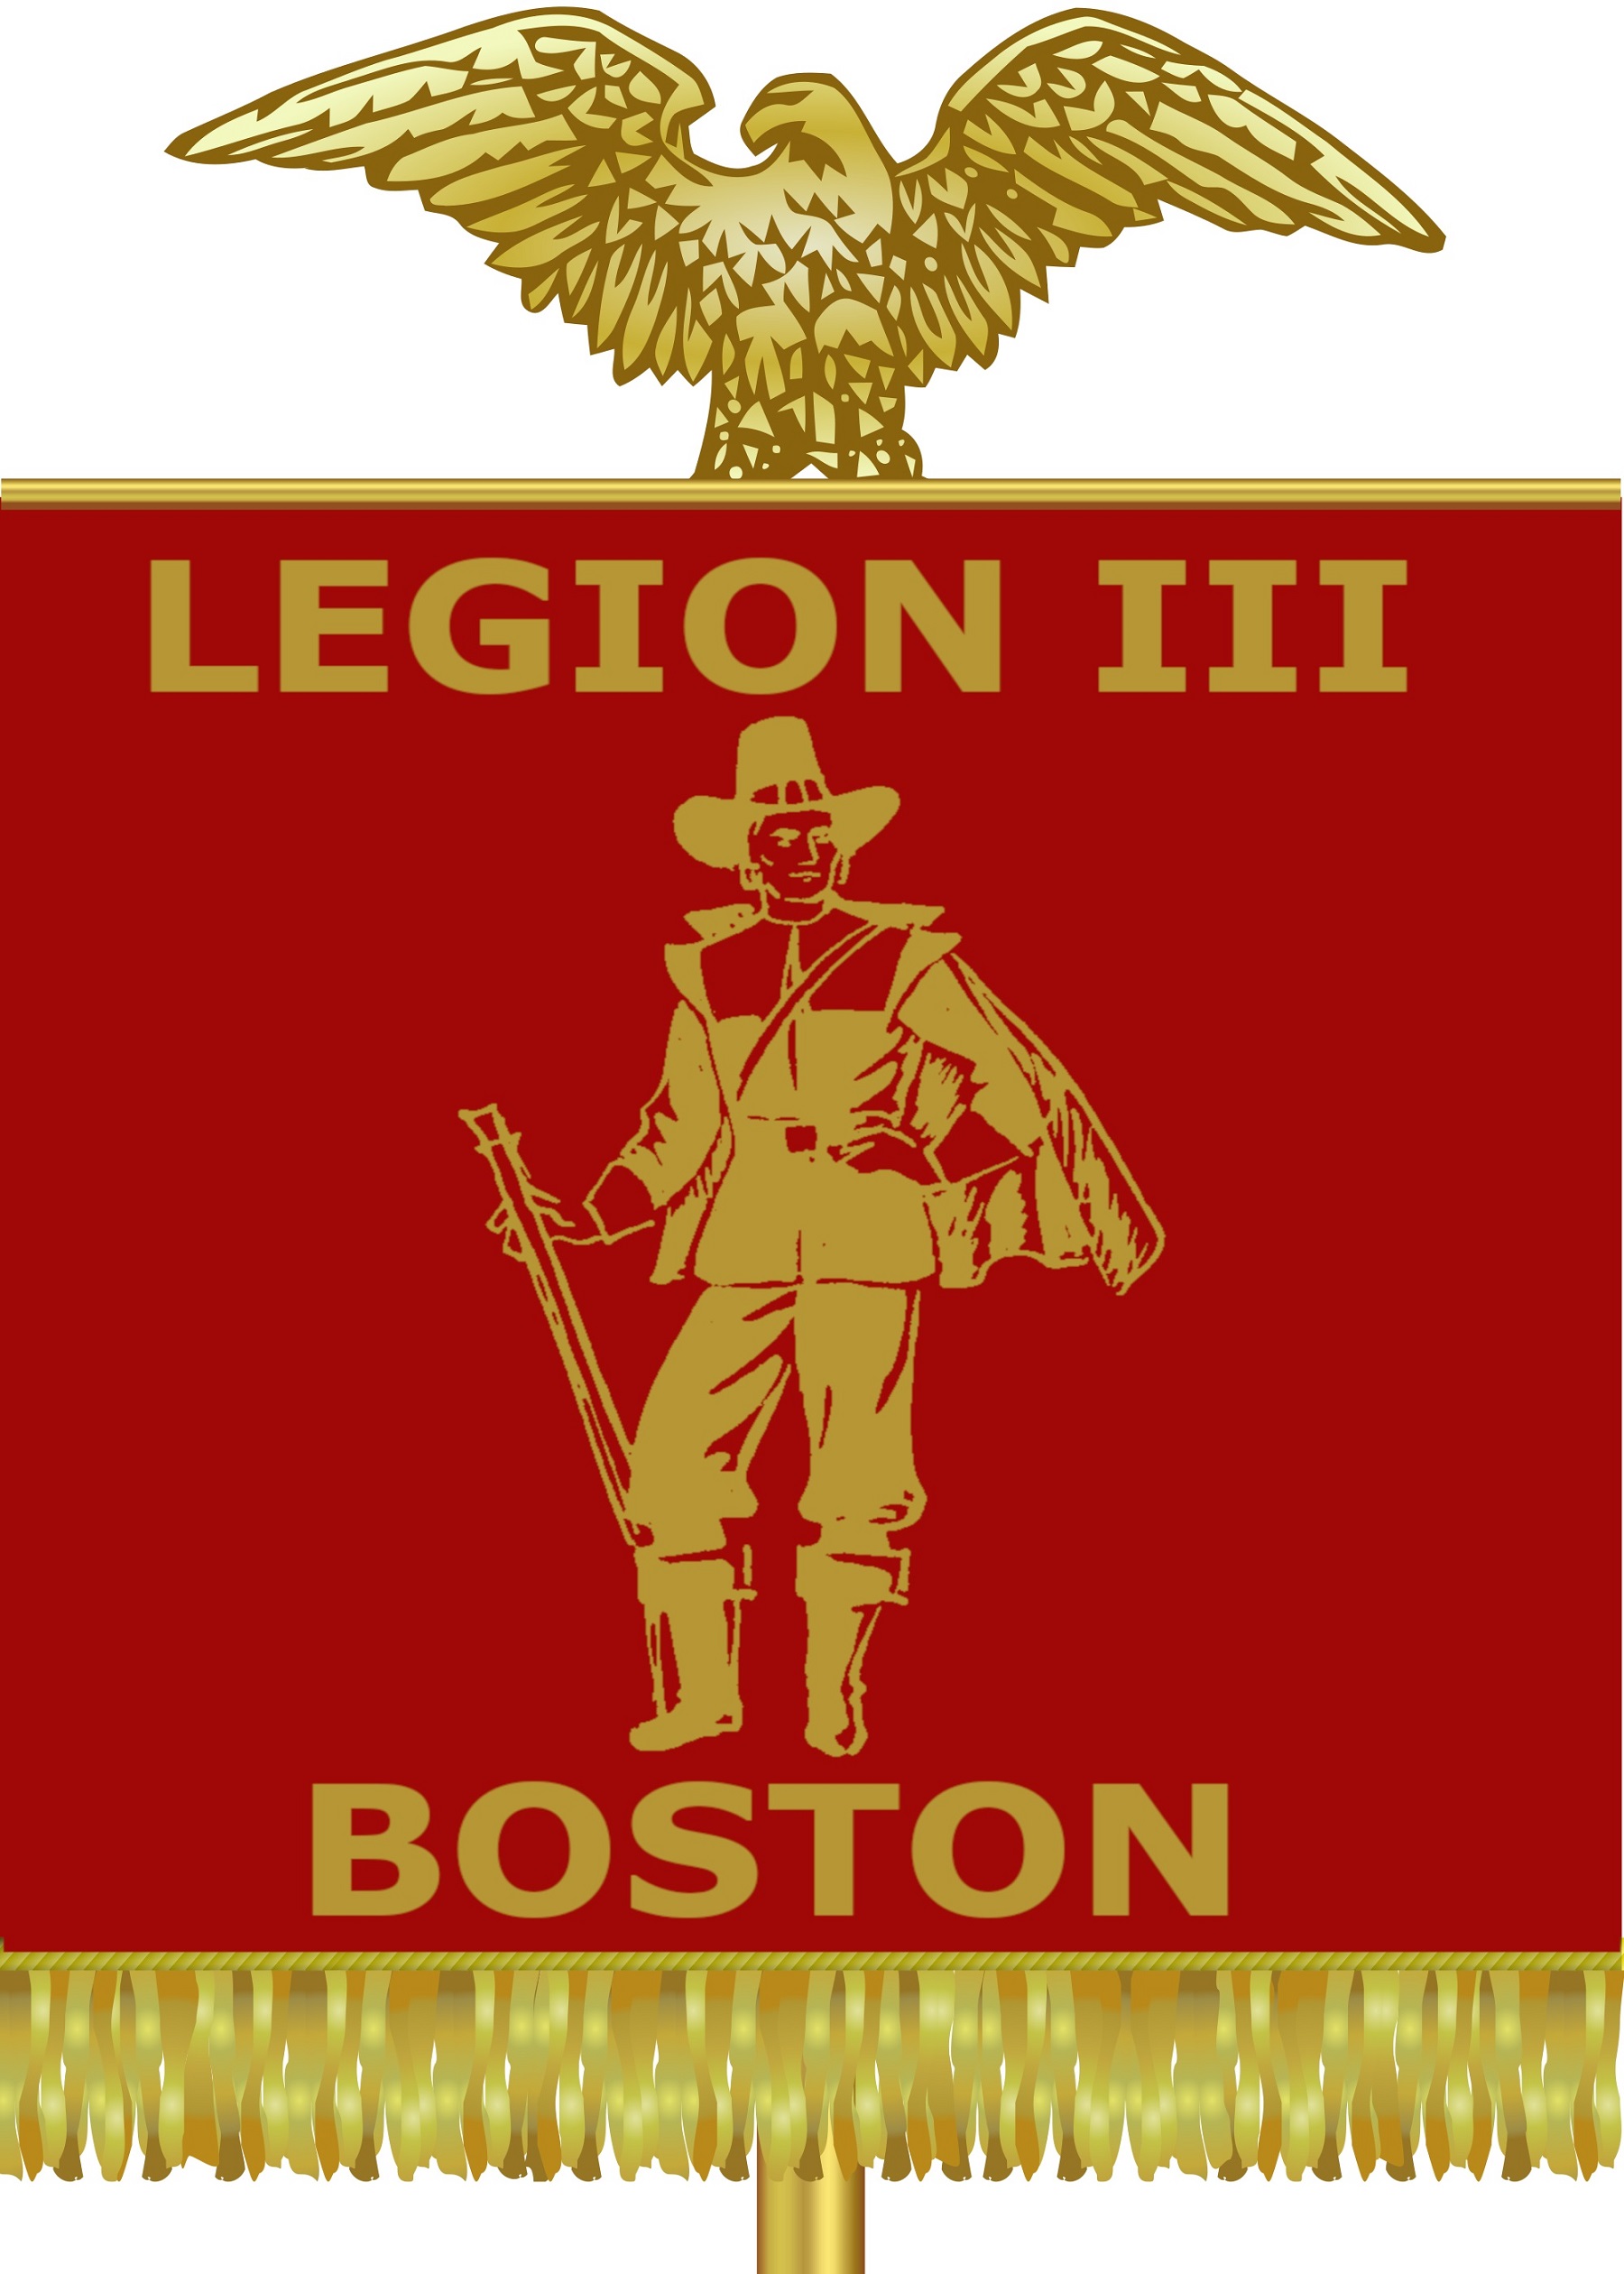 Legion III Boston.jpg